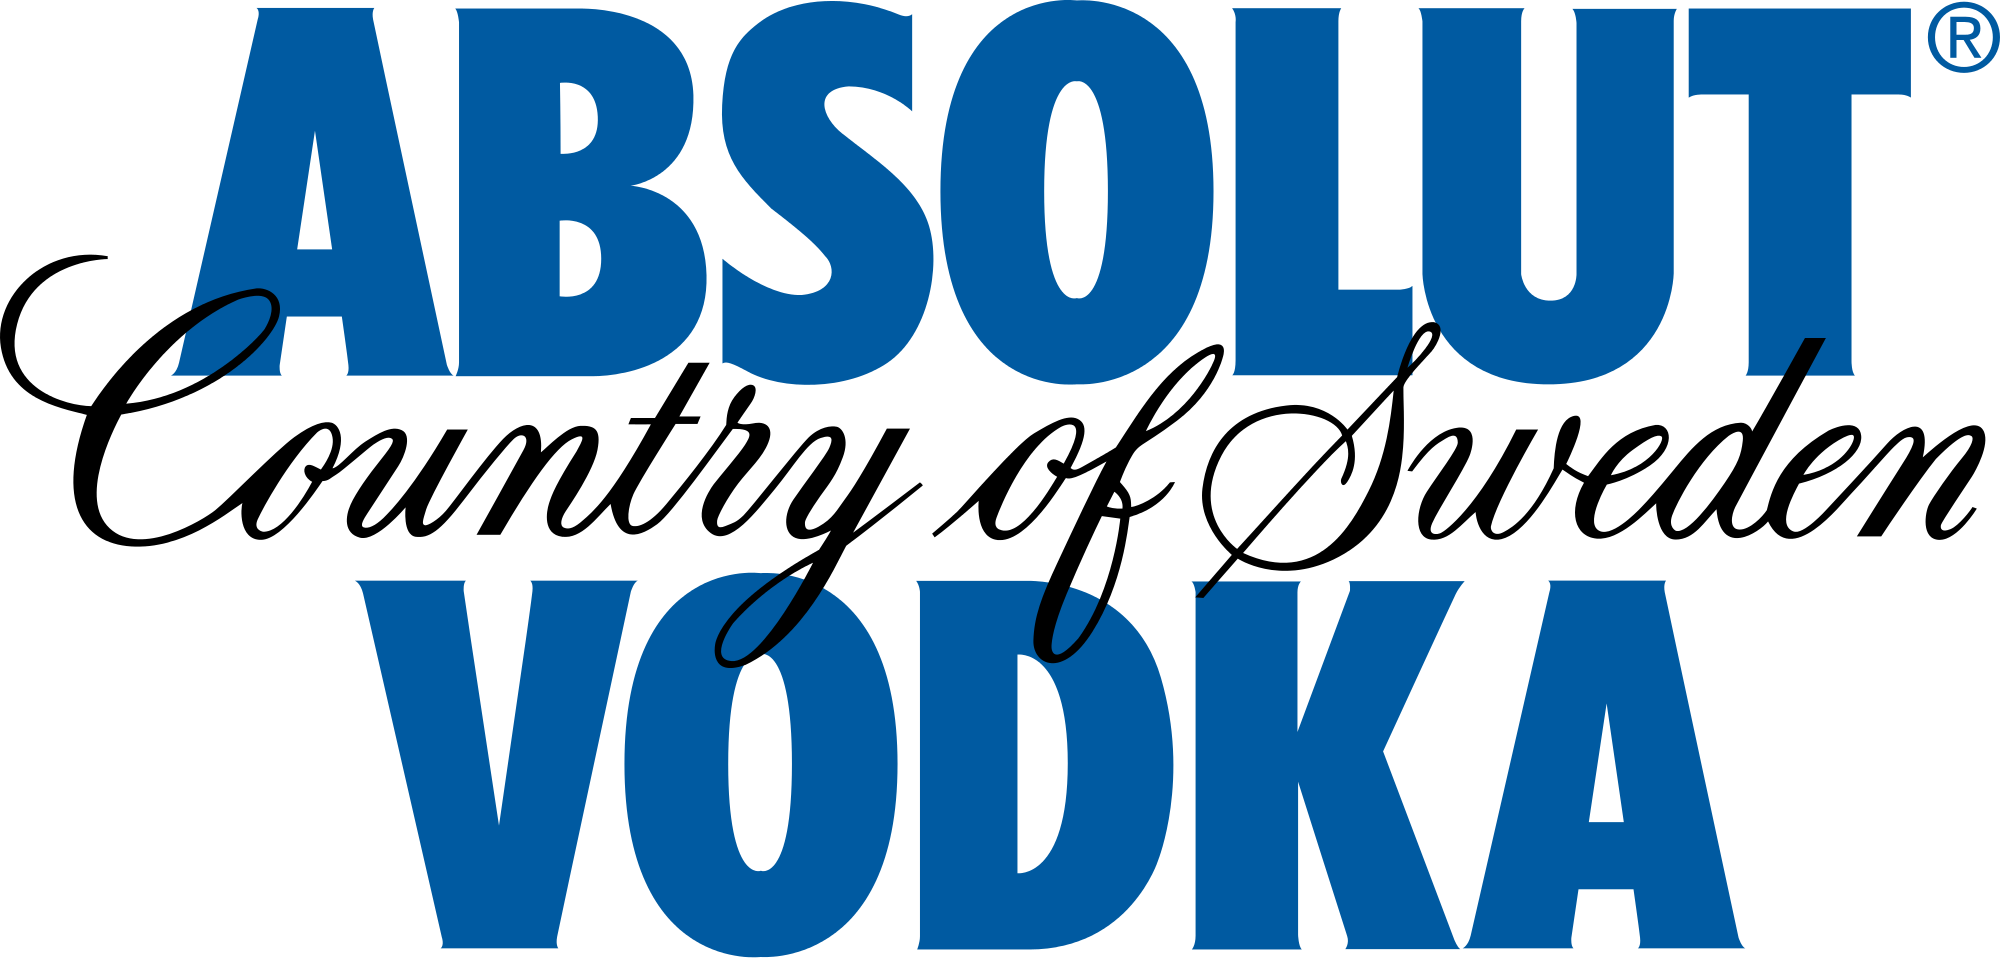 Absolut - Vodka PlusPng.com 